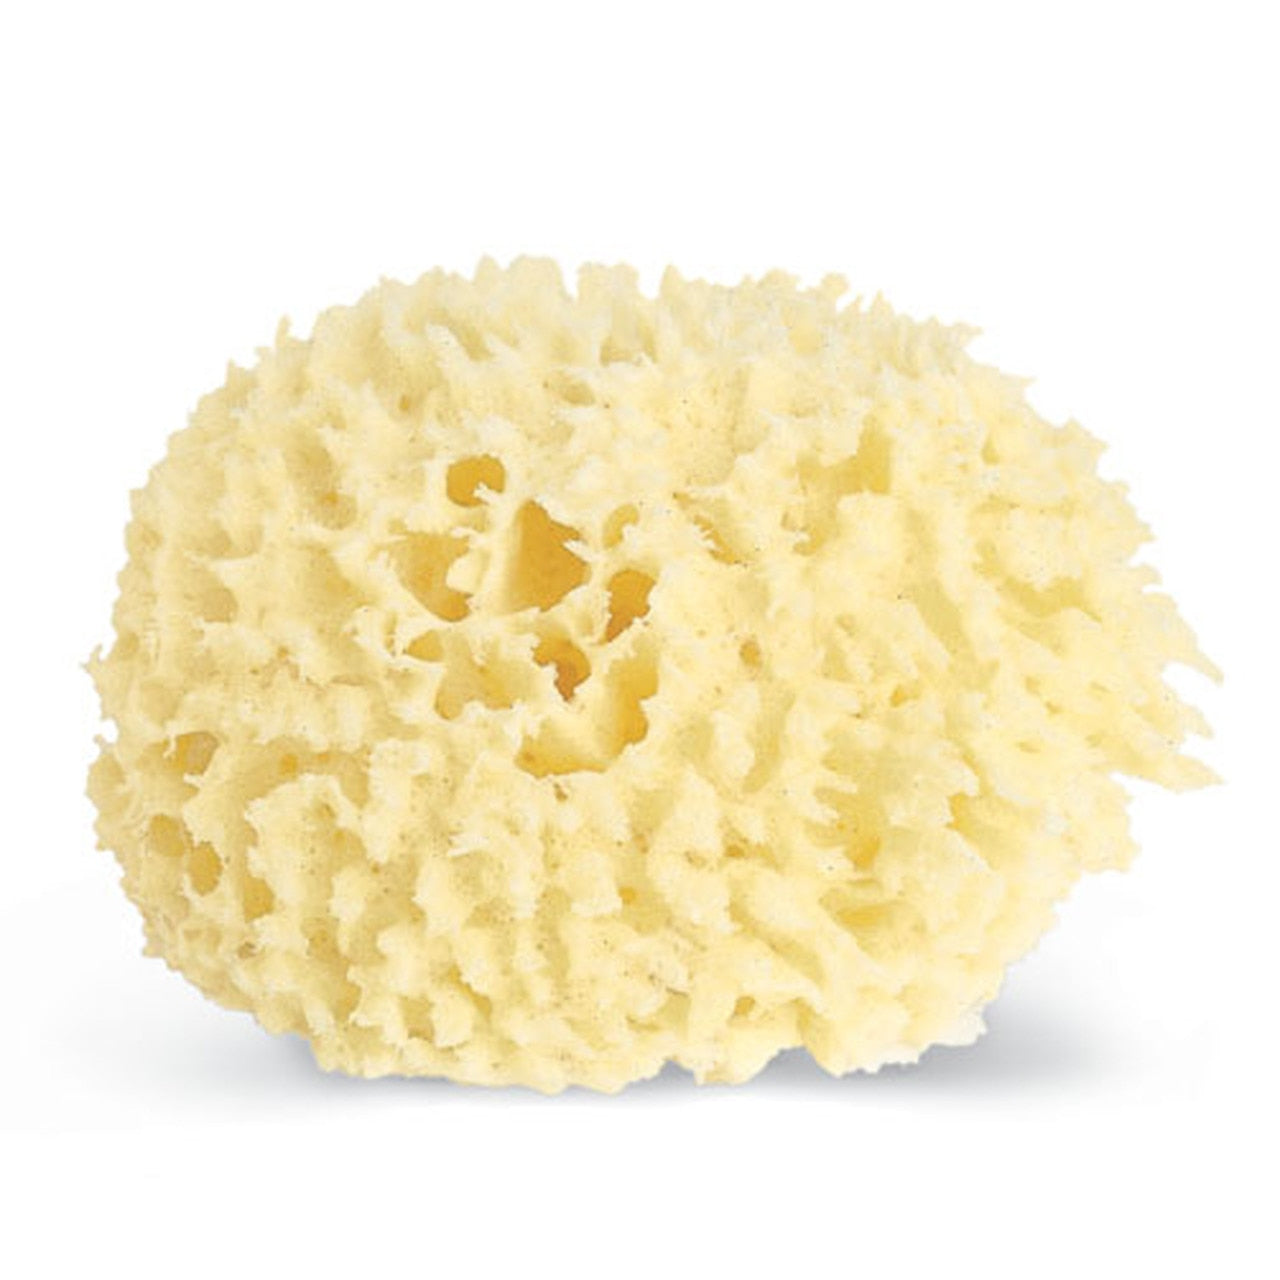 Natural Sea Wool Sponge